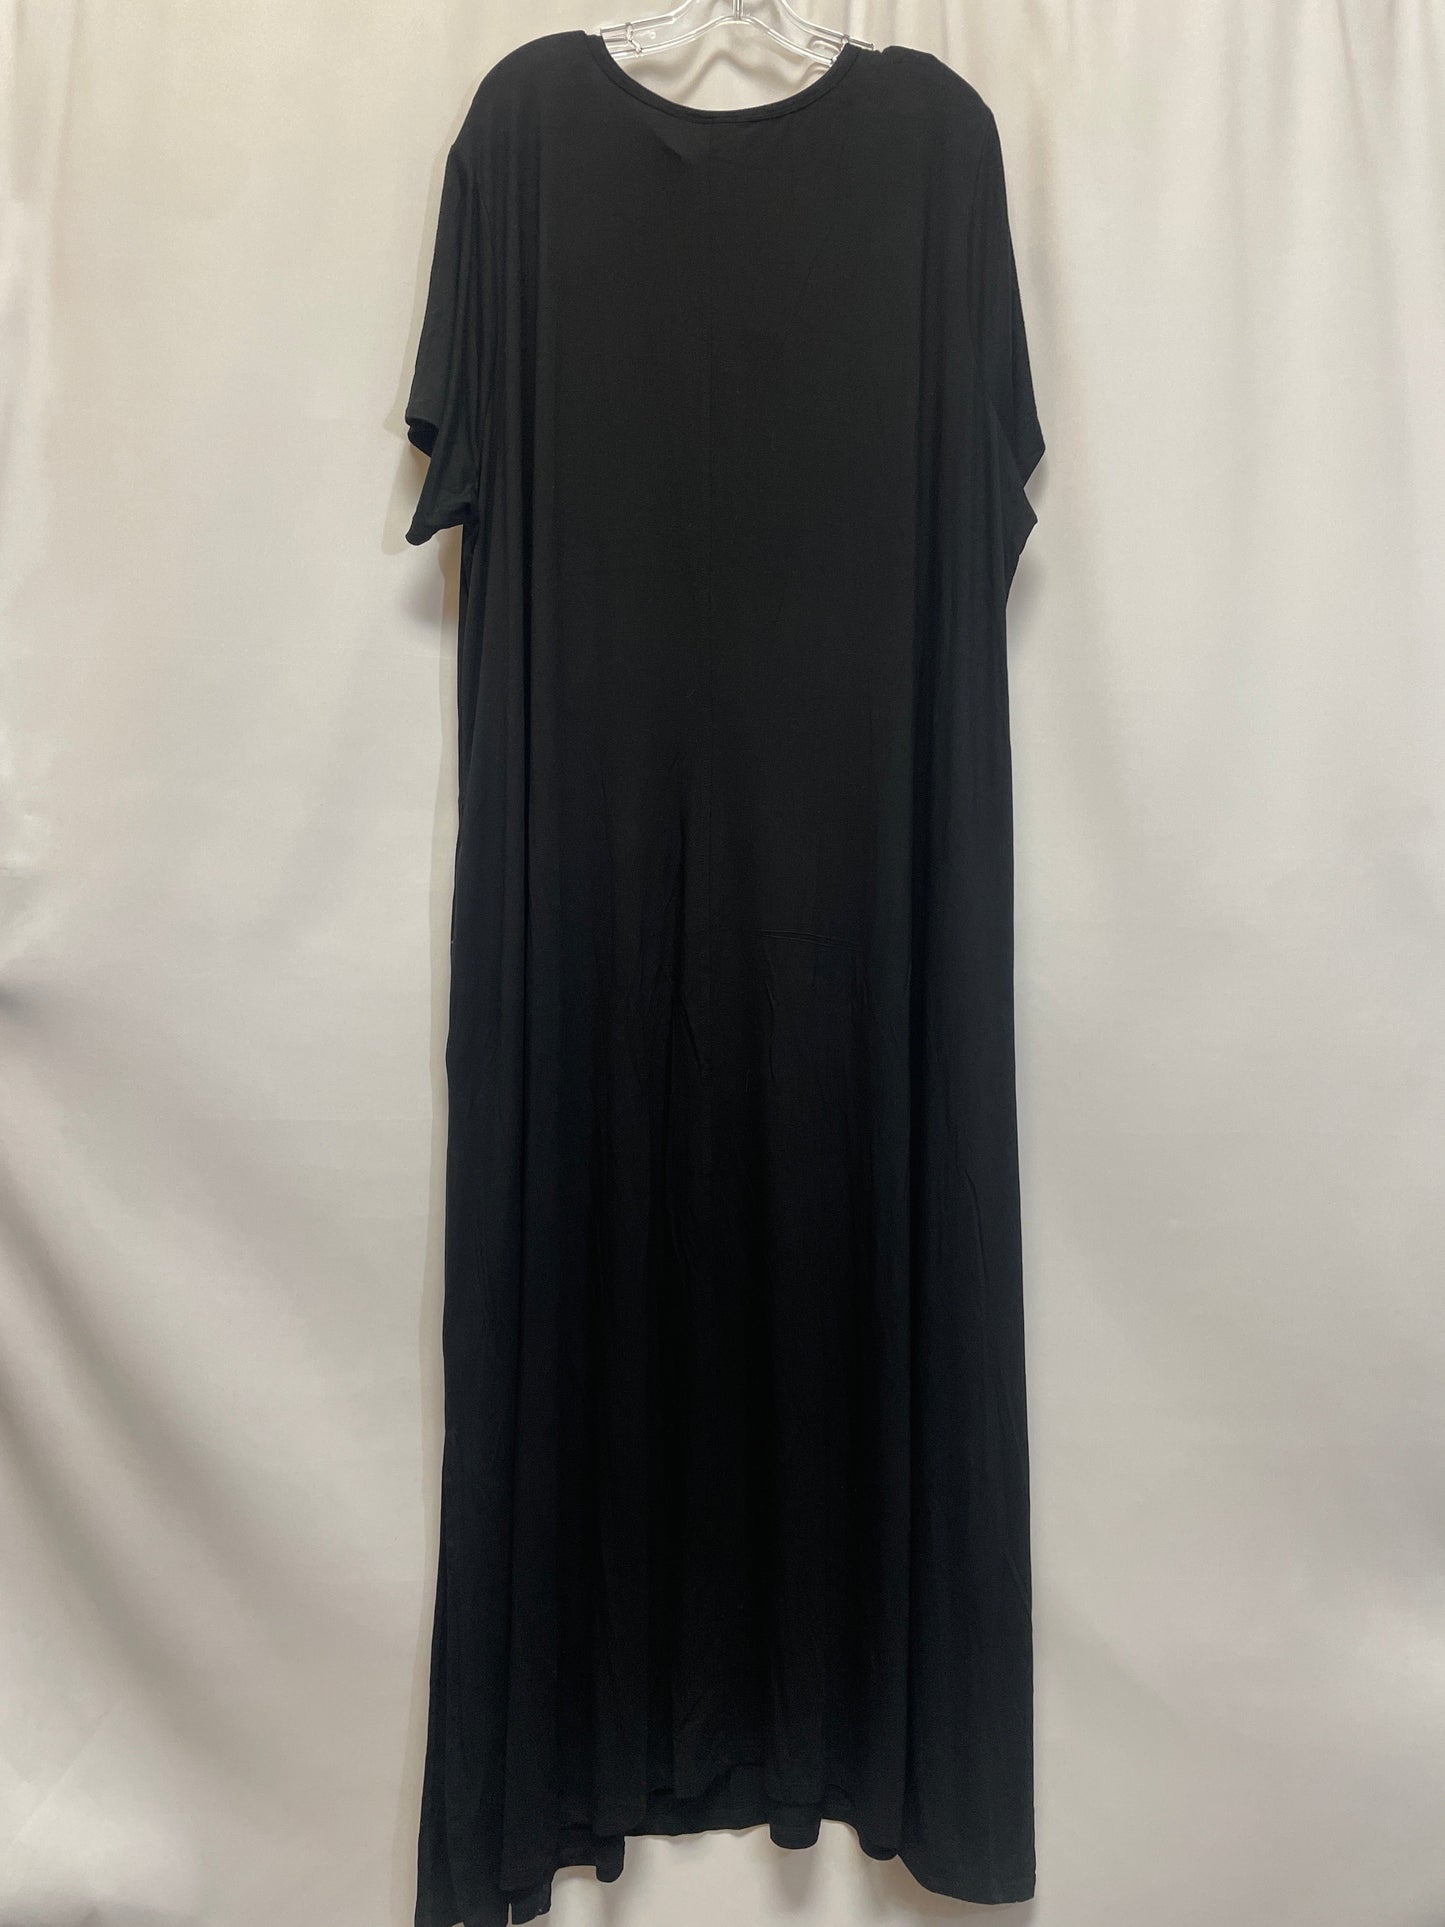 Black Dress Casual Maxi Clothes Mentor, Size 3x